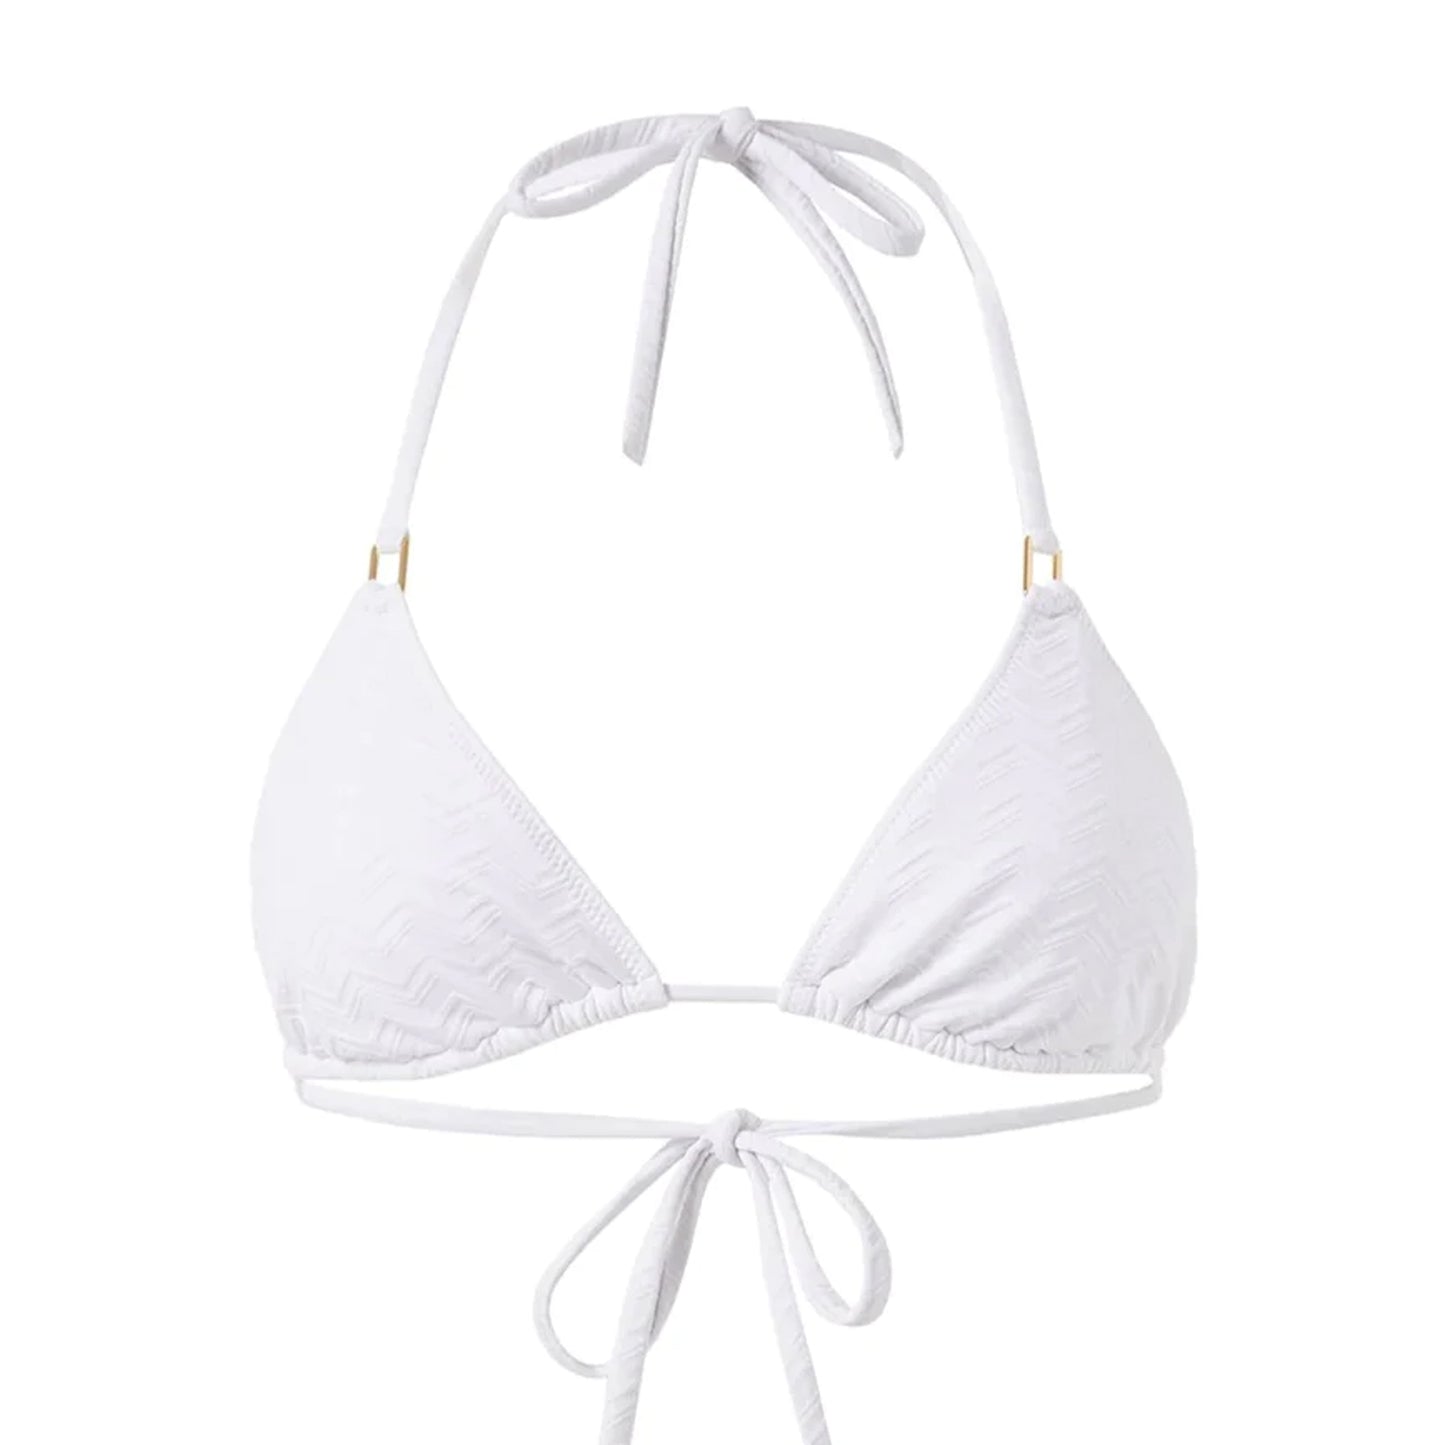 Cancun Zigzag White Bikini Top